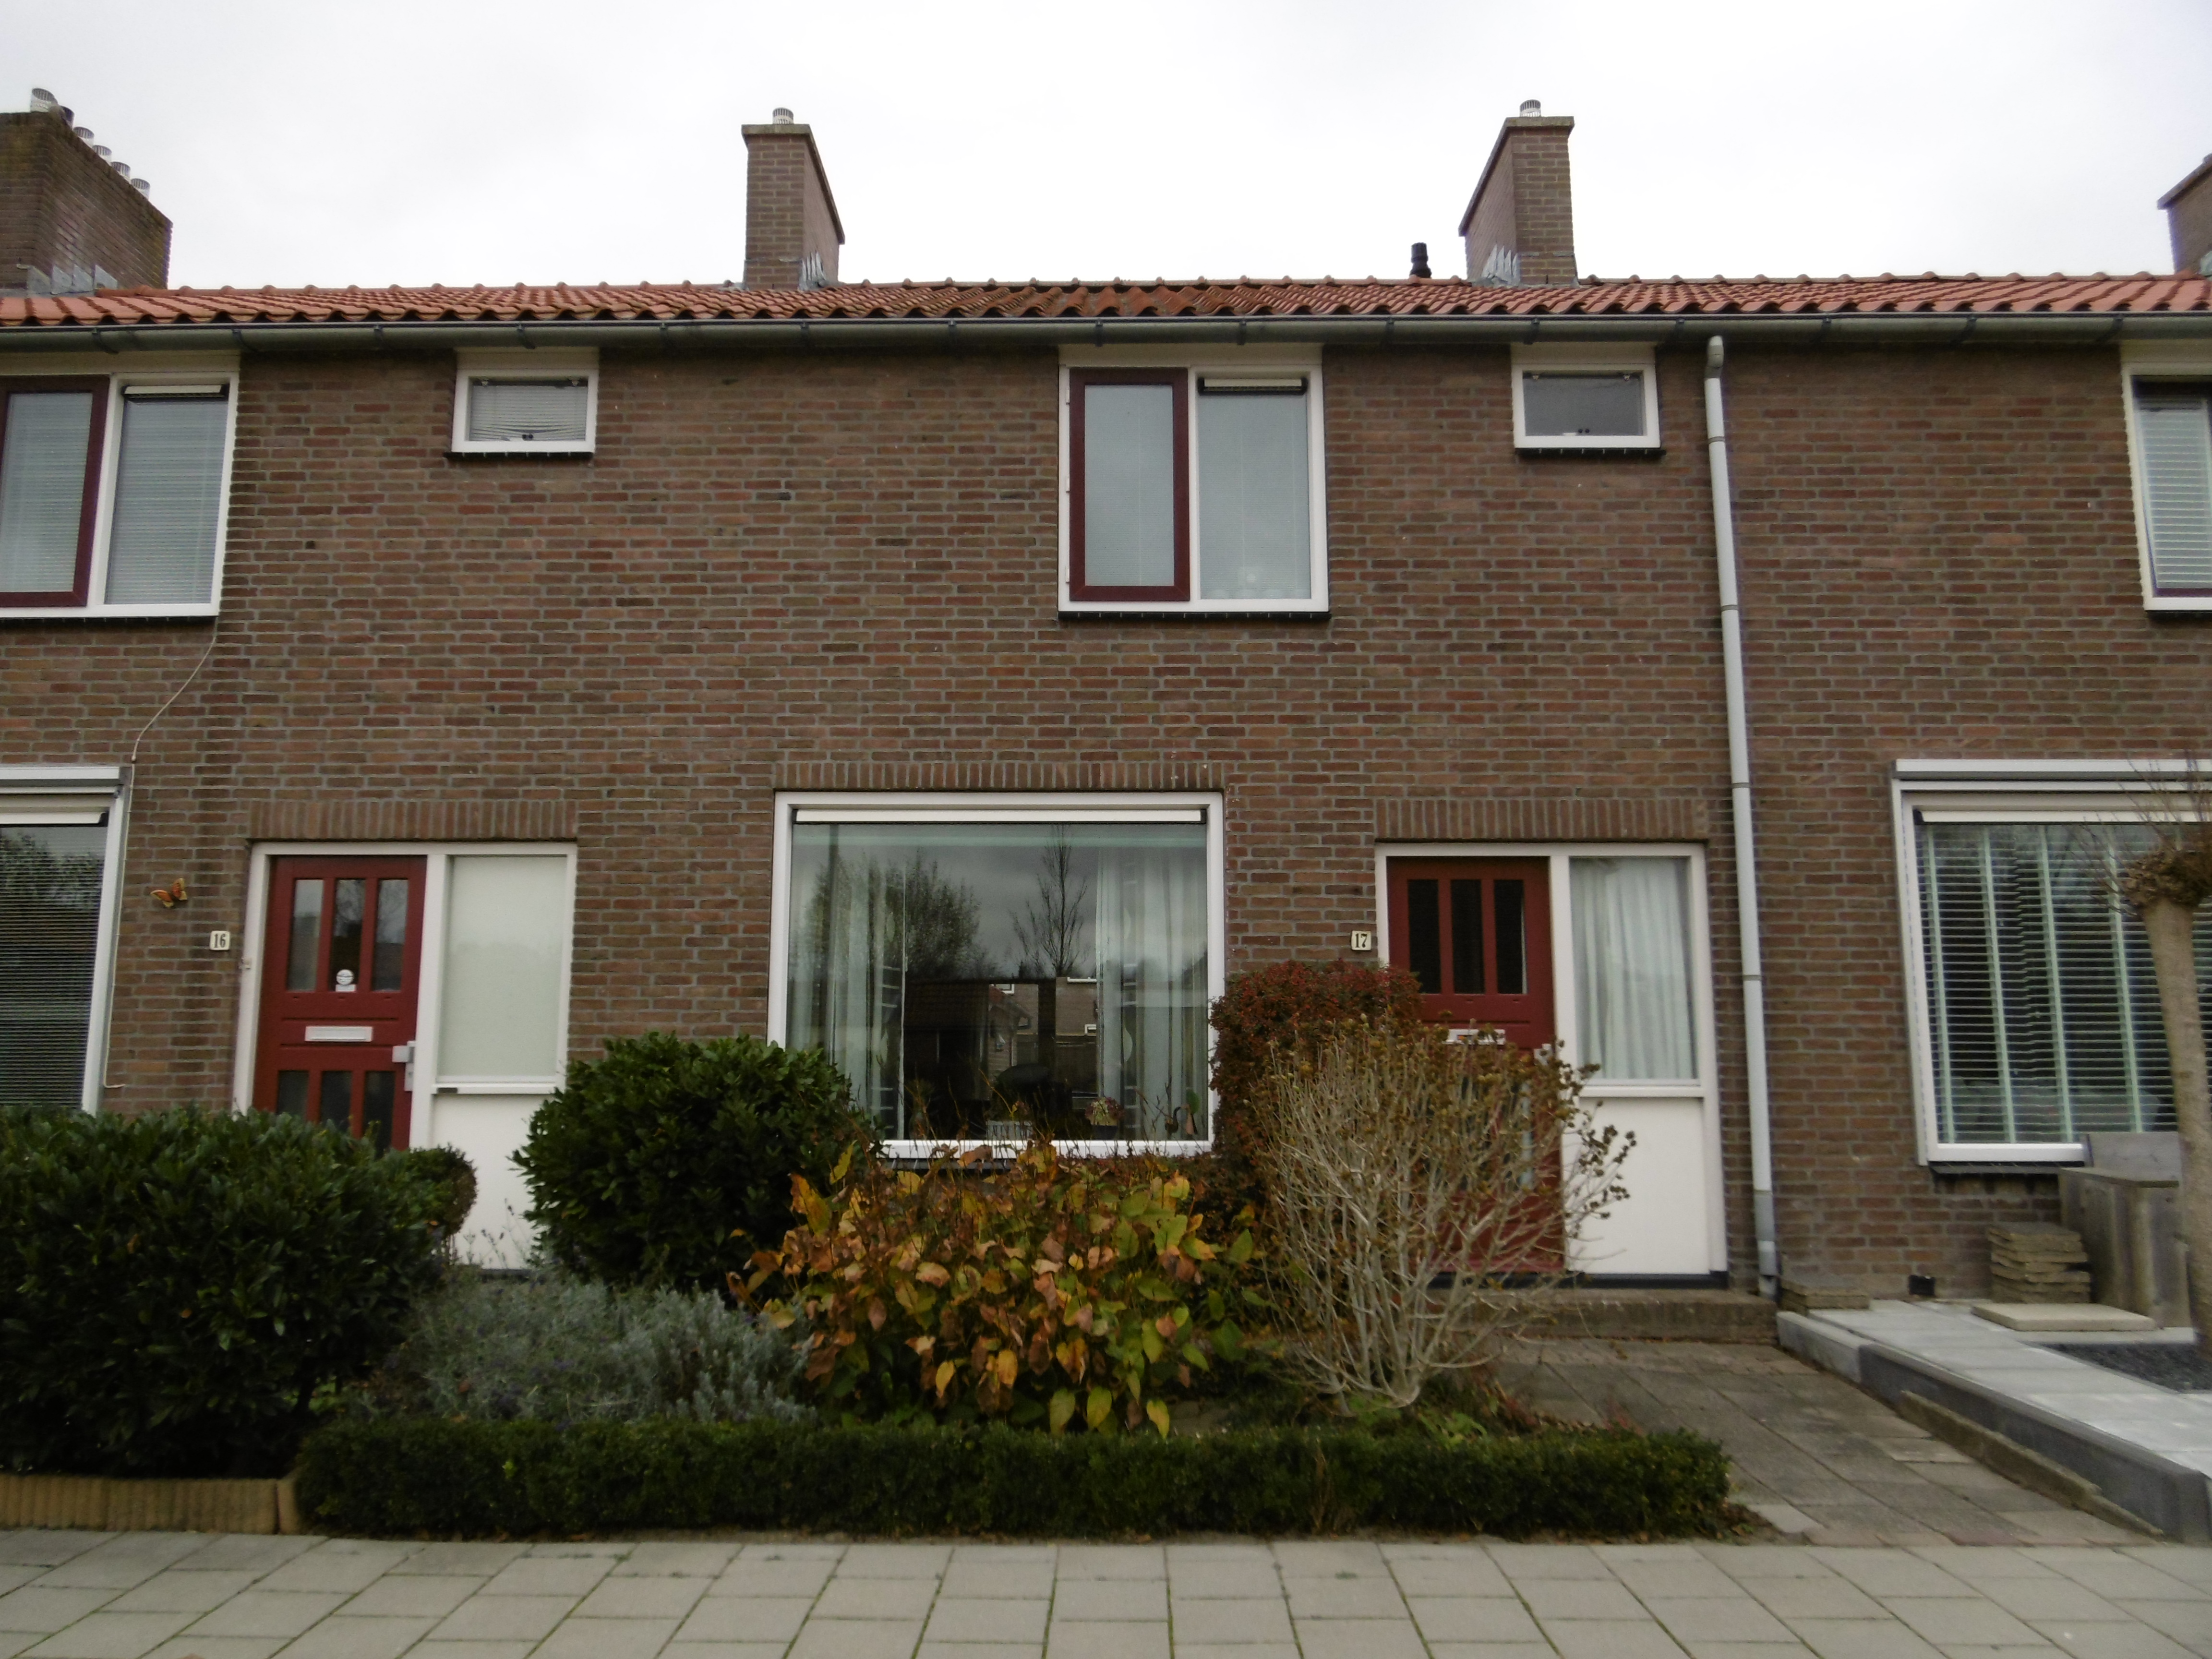 Beyerinckstraat 17, 8302 GV Emmeloord, Nederland